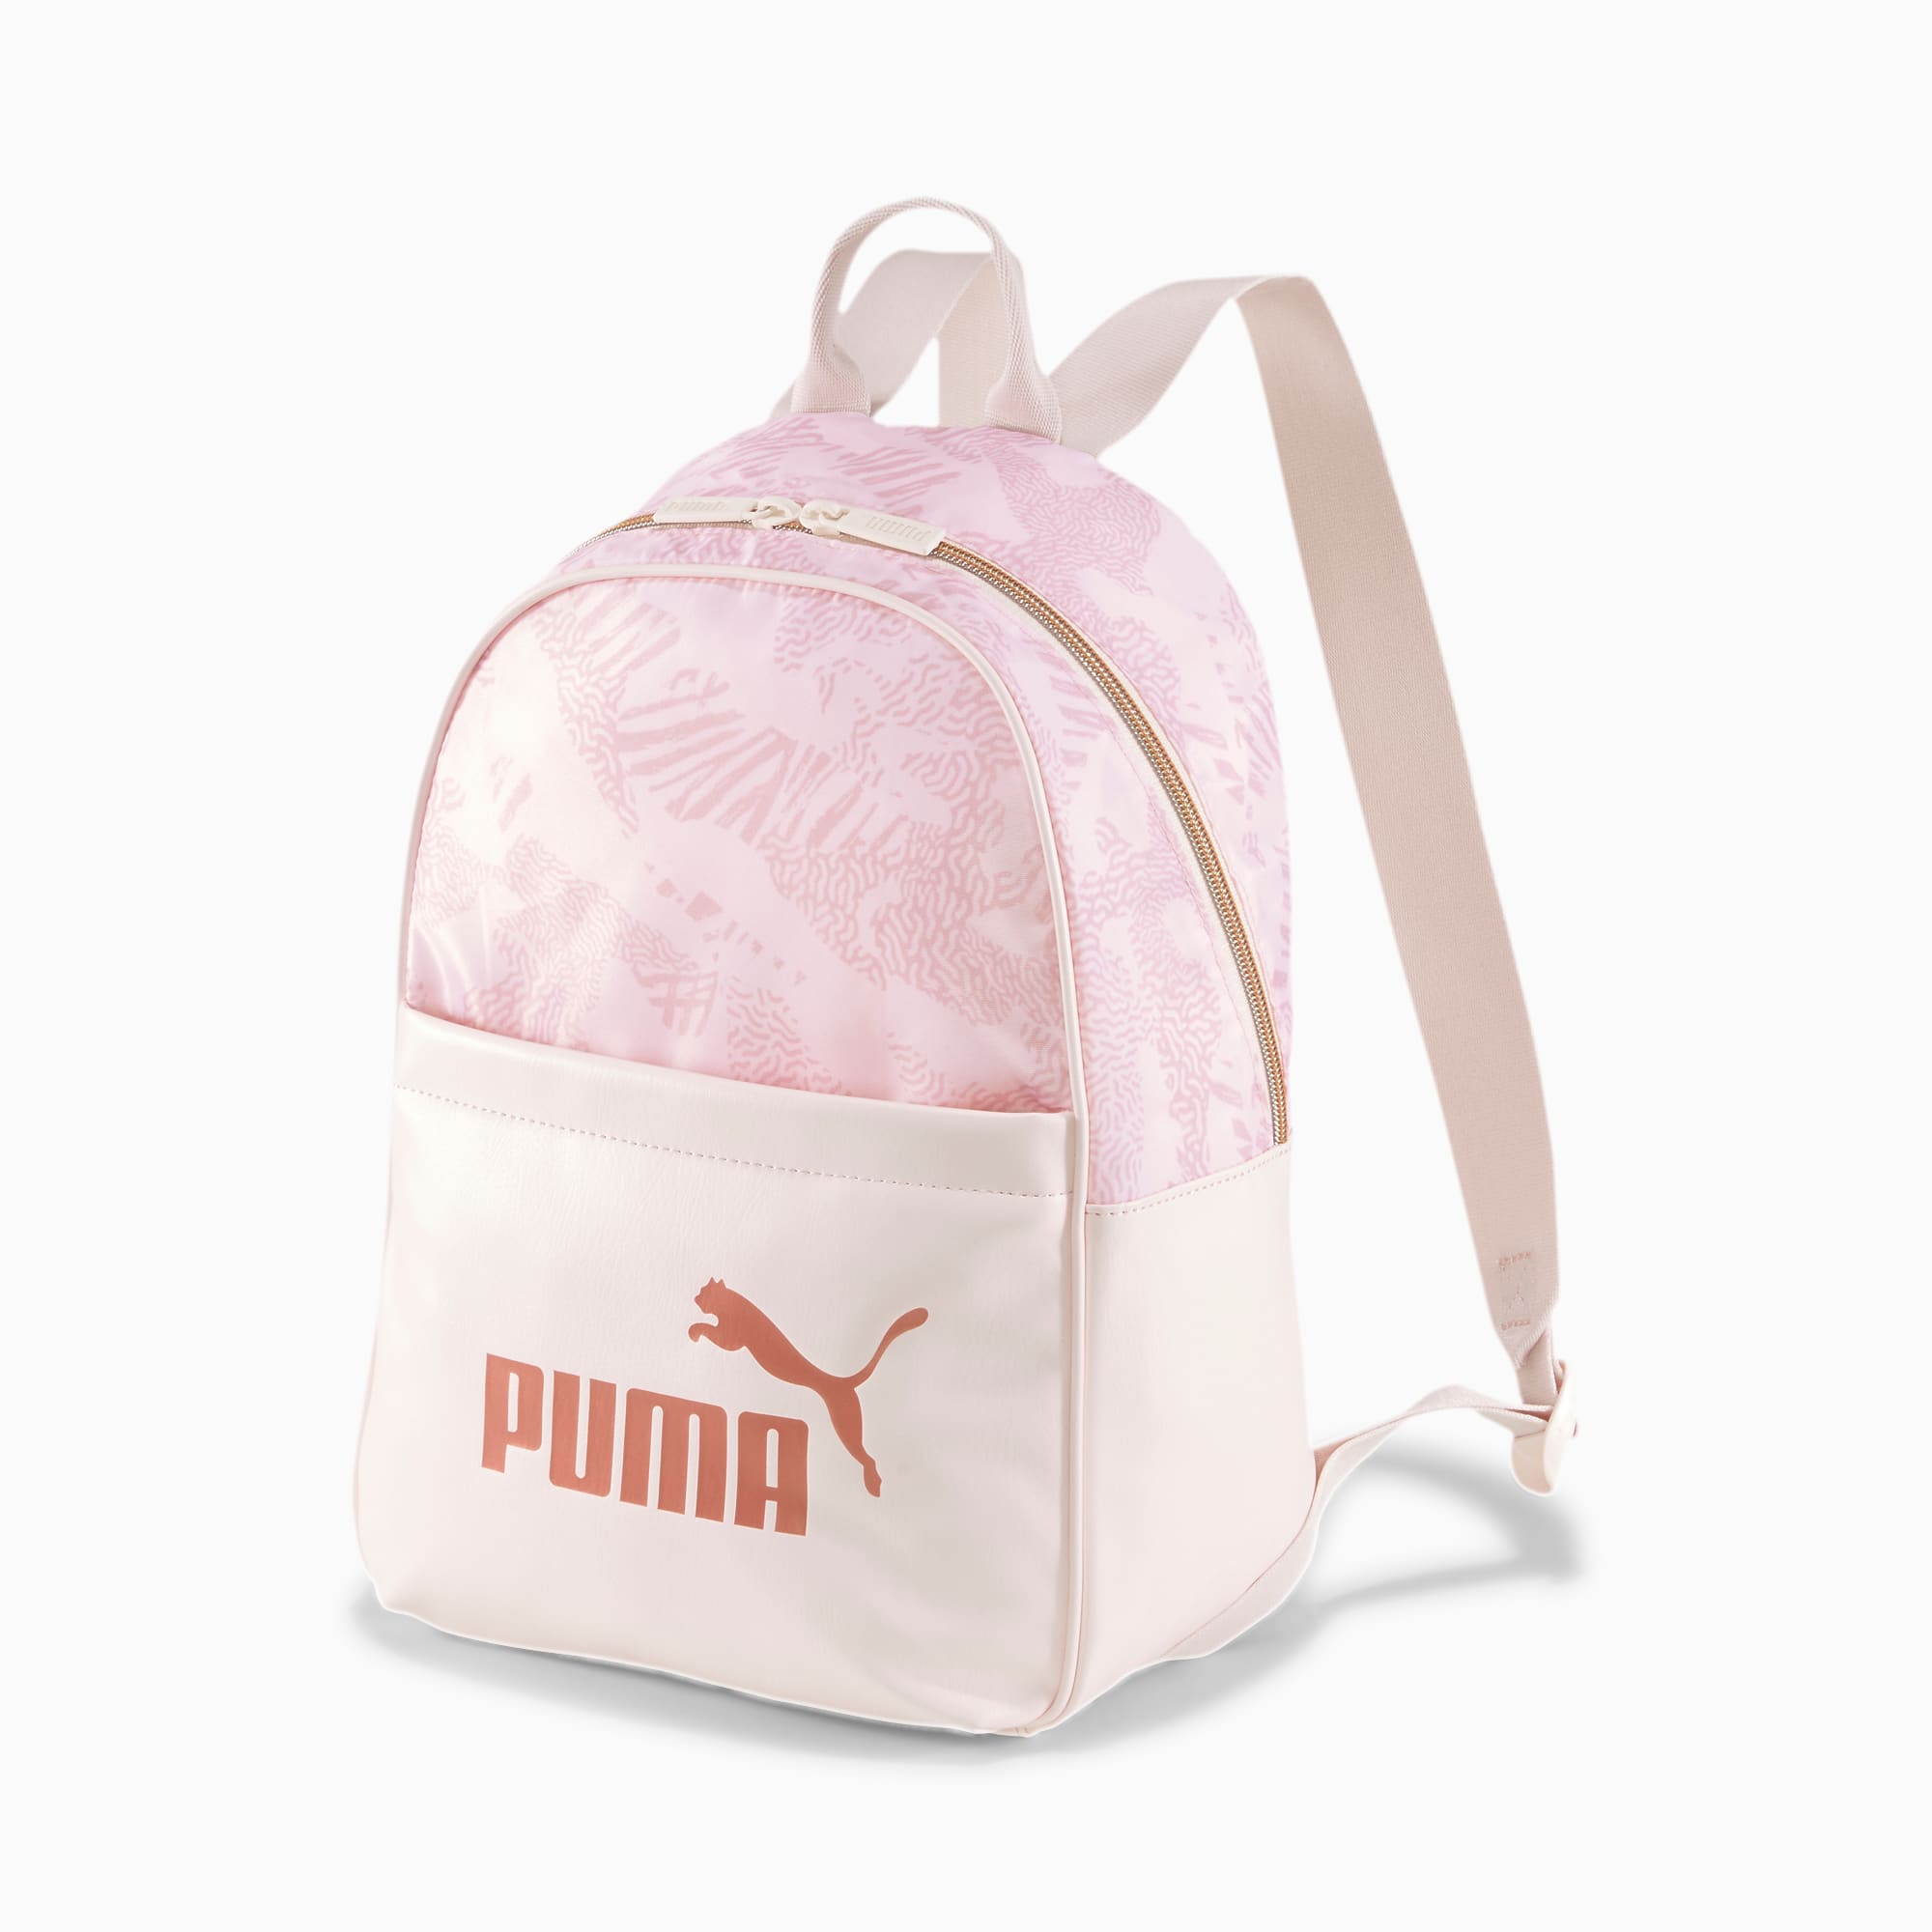 puma women backpack